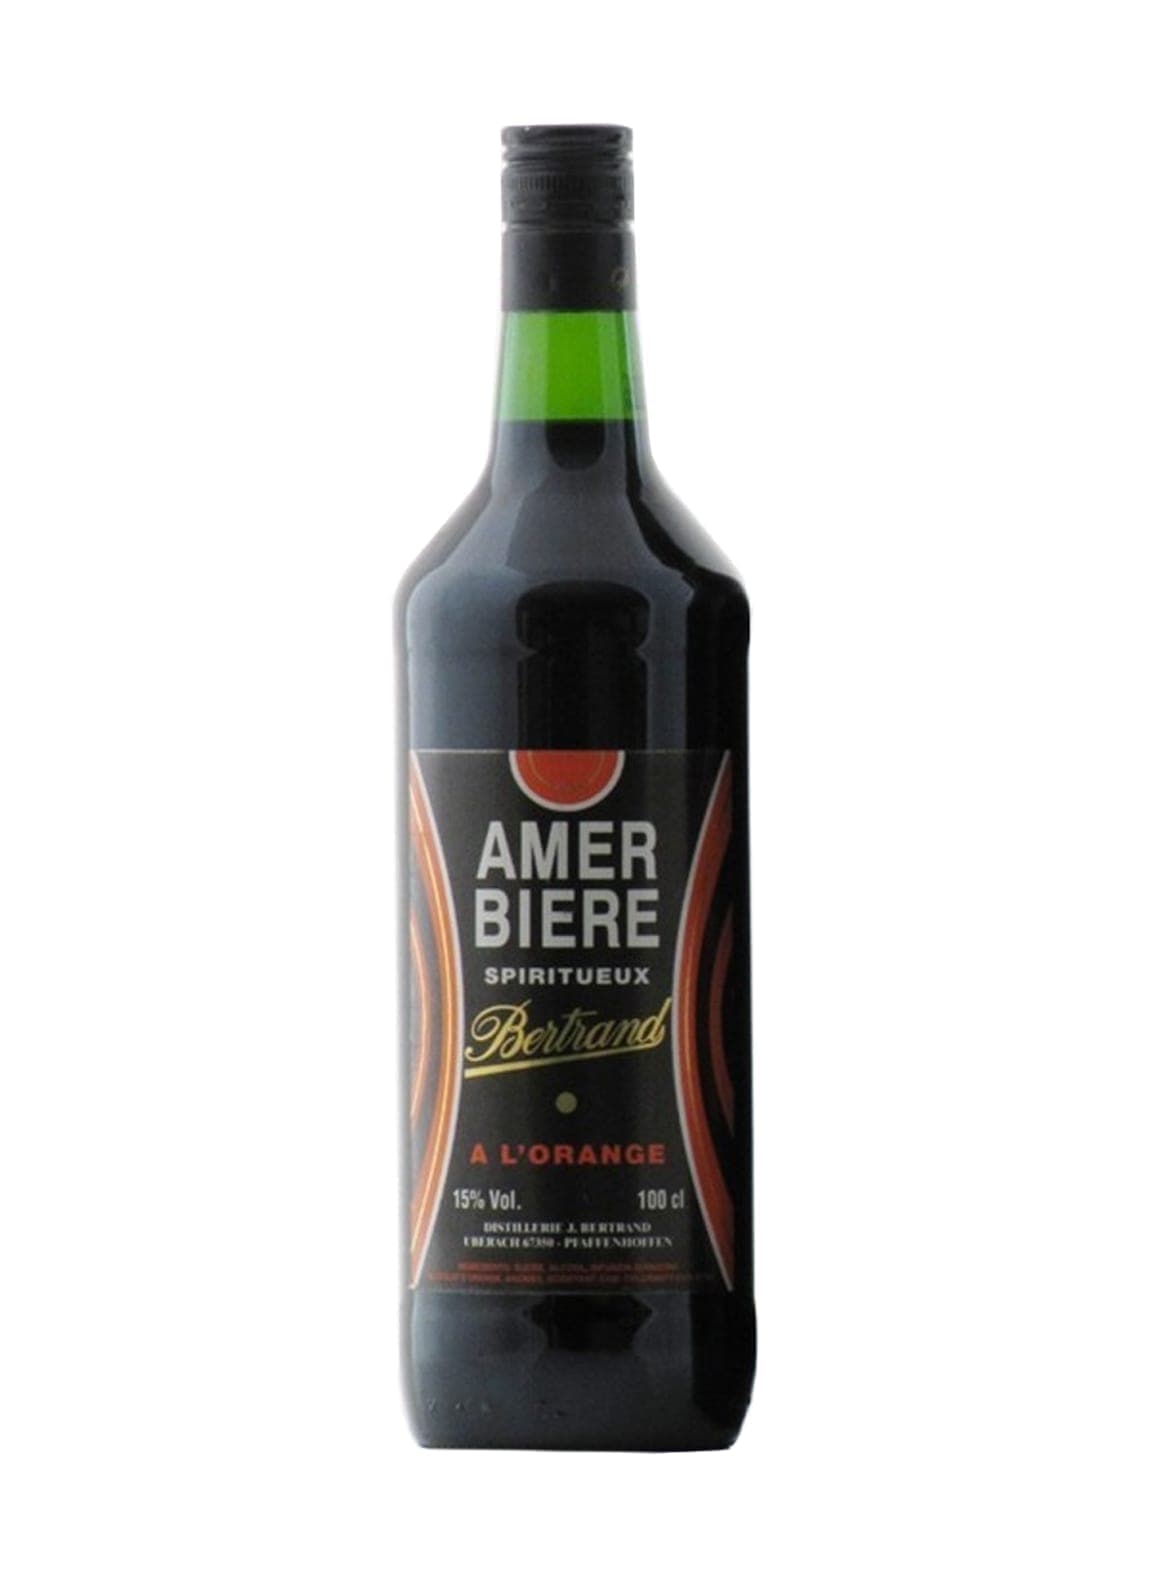 Bertrand Amer Biere (Bitter orange) Aperitif 15% 1000ml | Liquor & Spirits | Shop online at Spirits of France